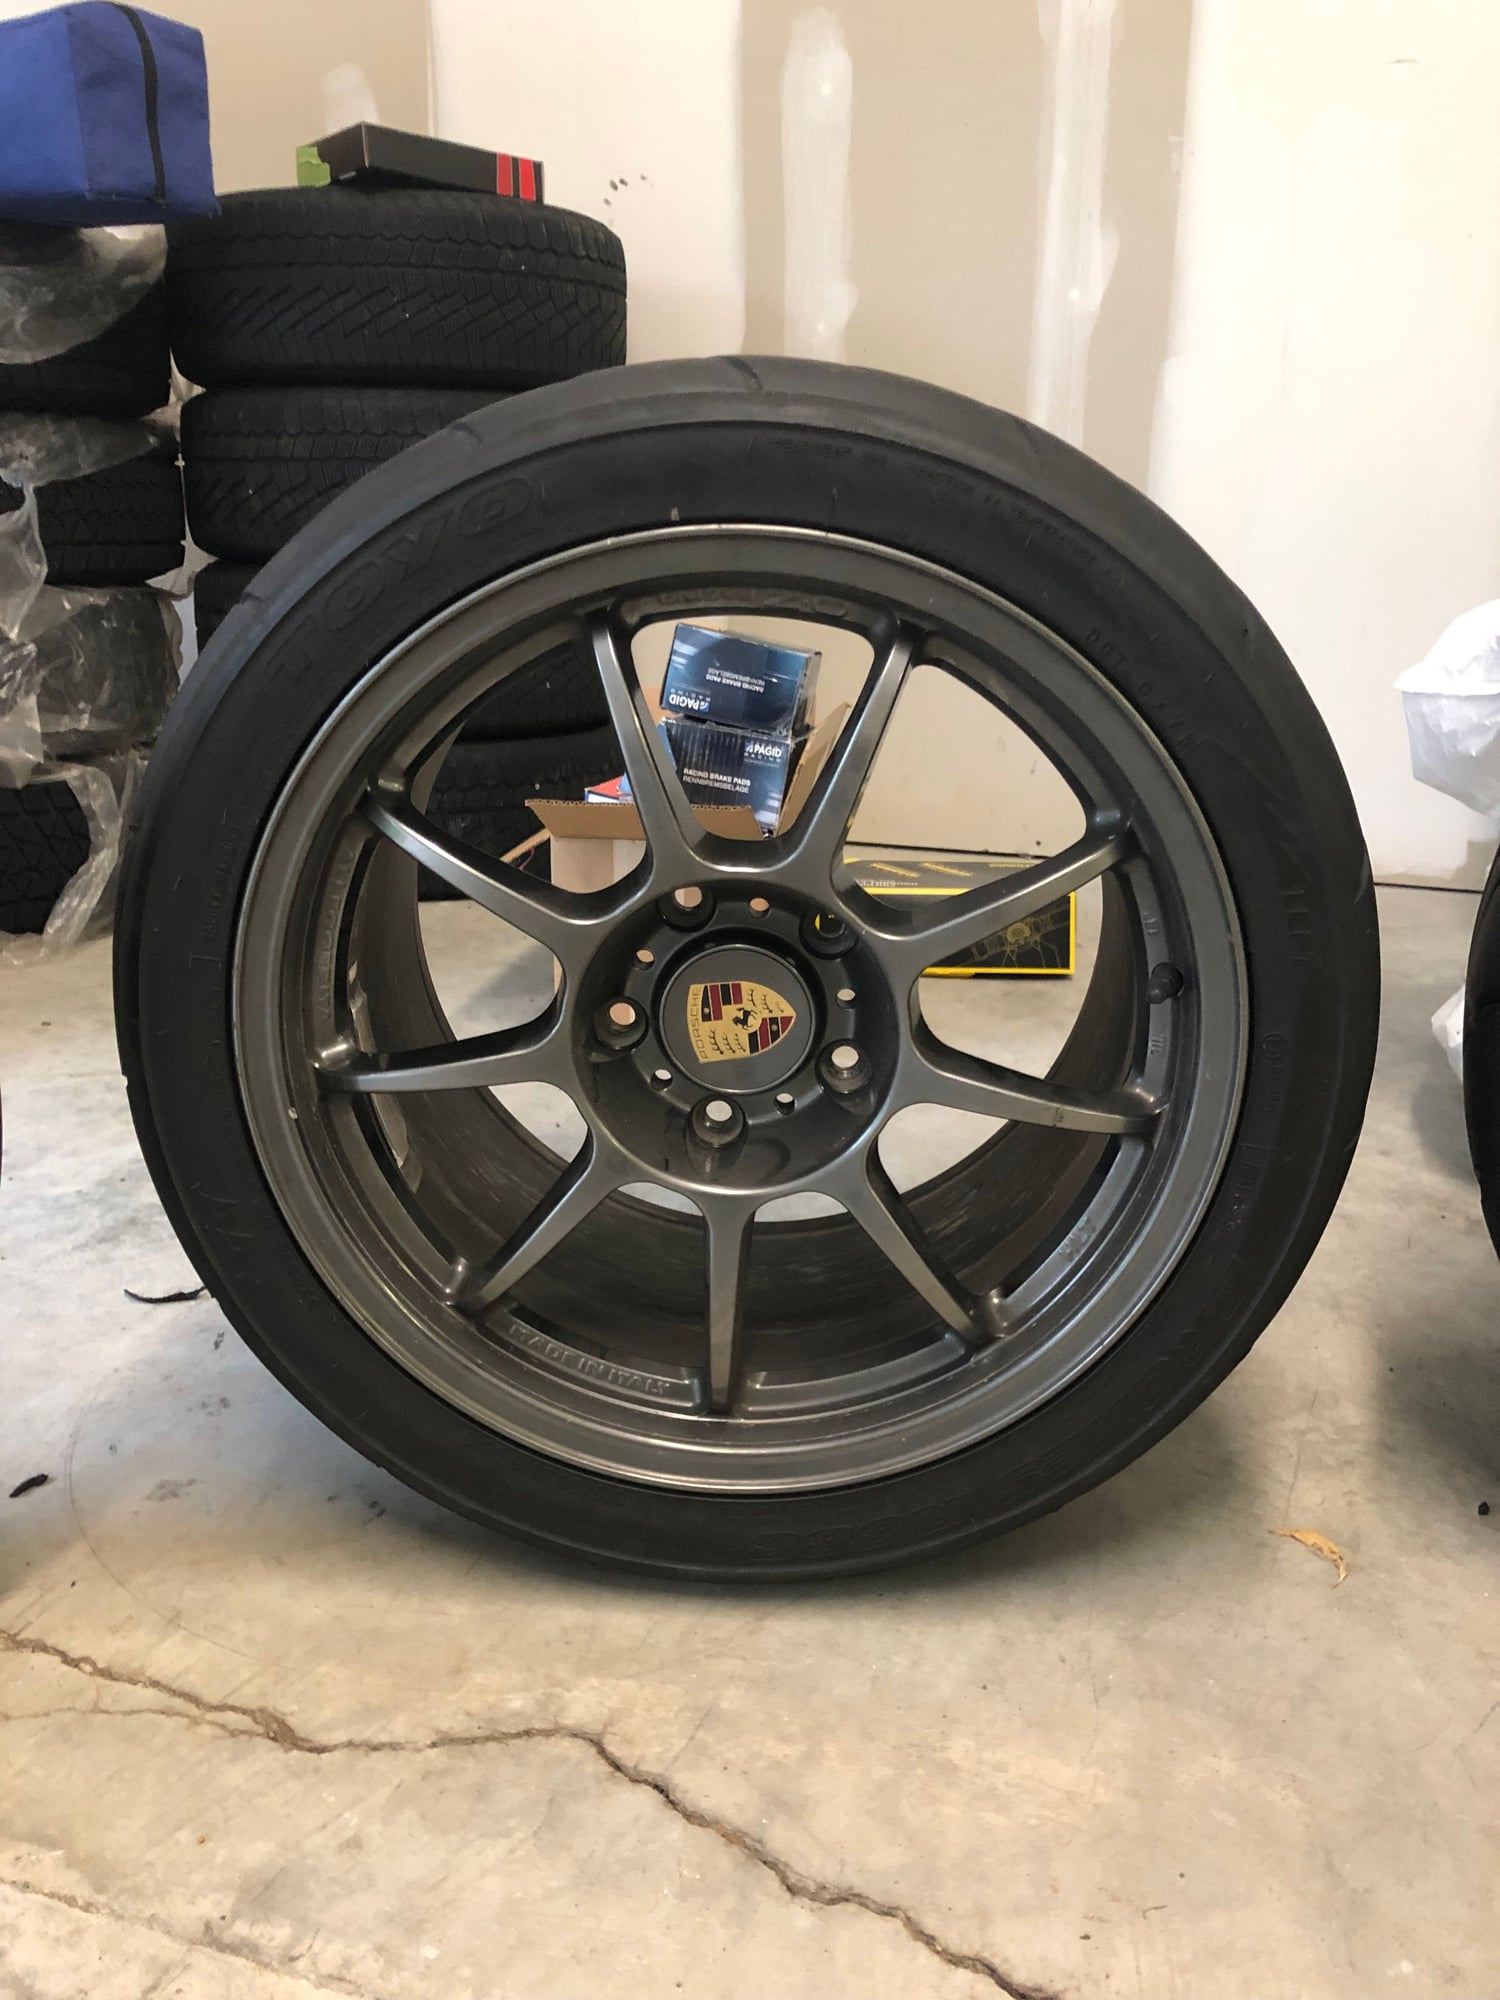 Wheels and Tires/Axles - 18" OZ allegerita wheels - Used - Peoria, IL 61616, United States